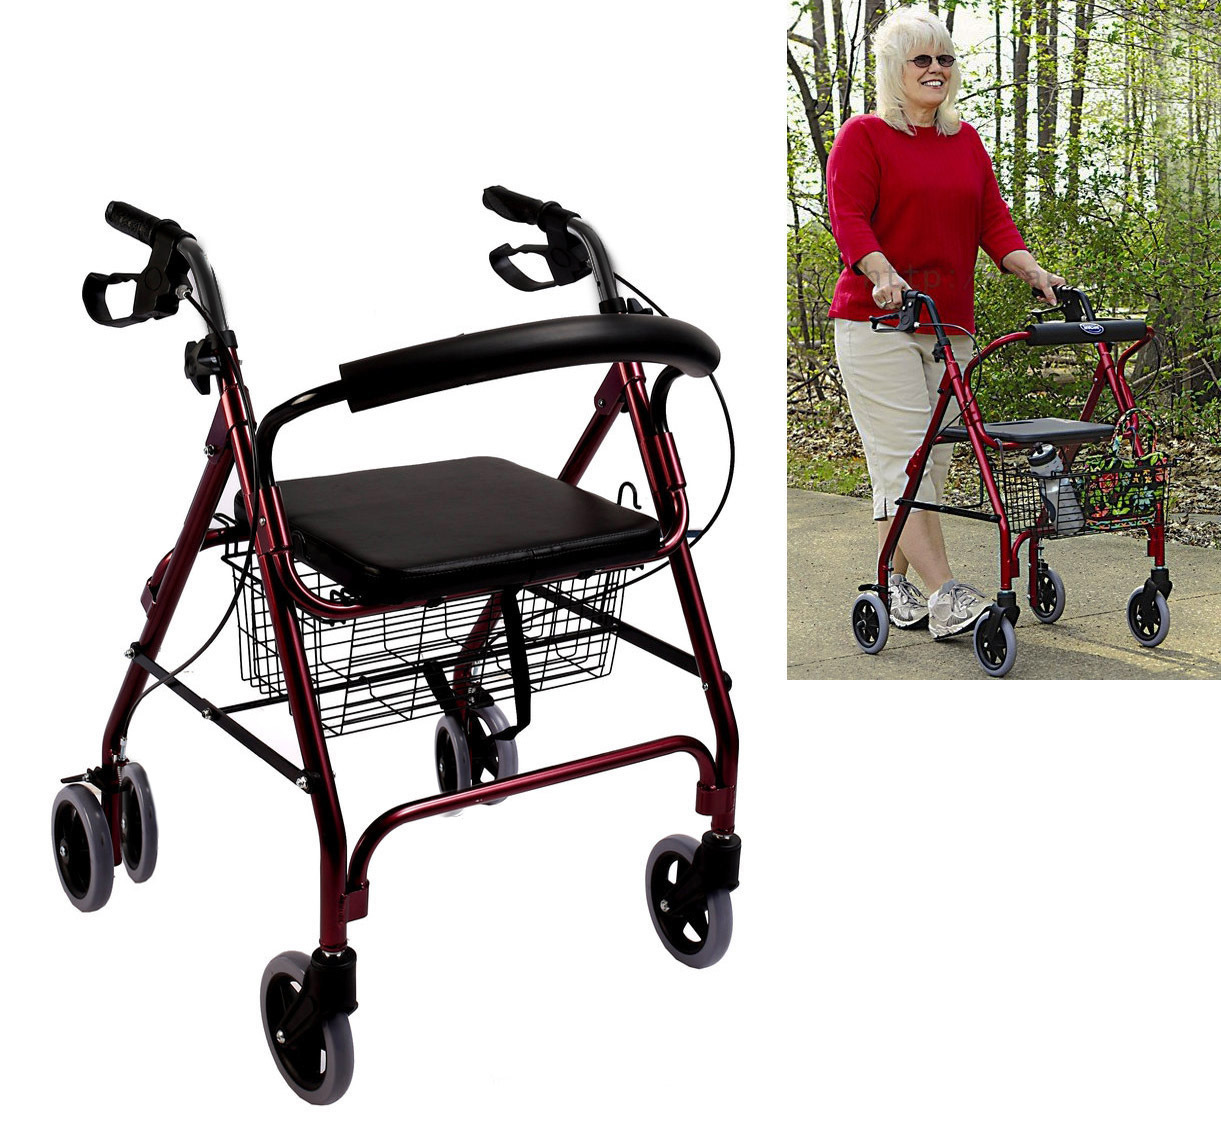 6-Wheel Senior's Foldable Rollator Mobility Walker Walking Frame with Seat